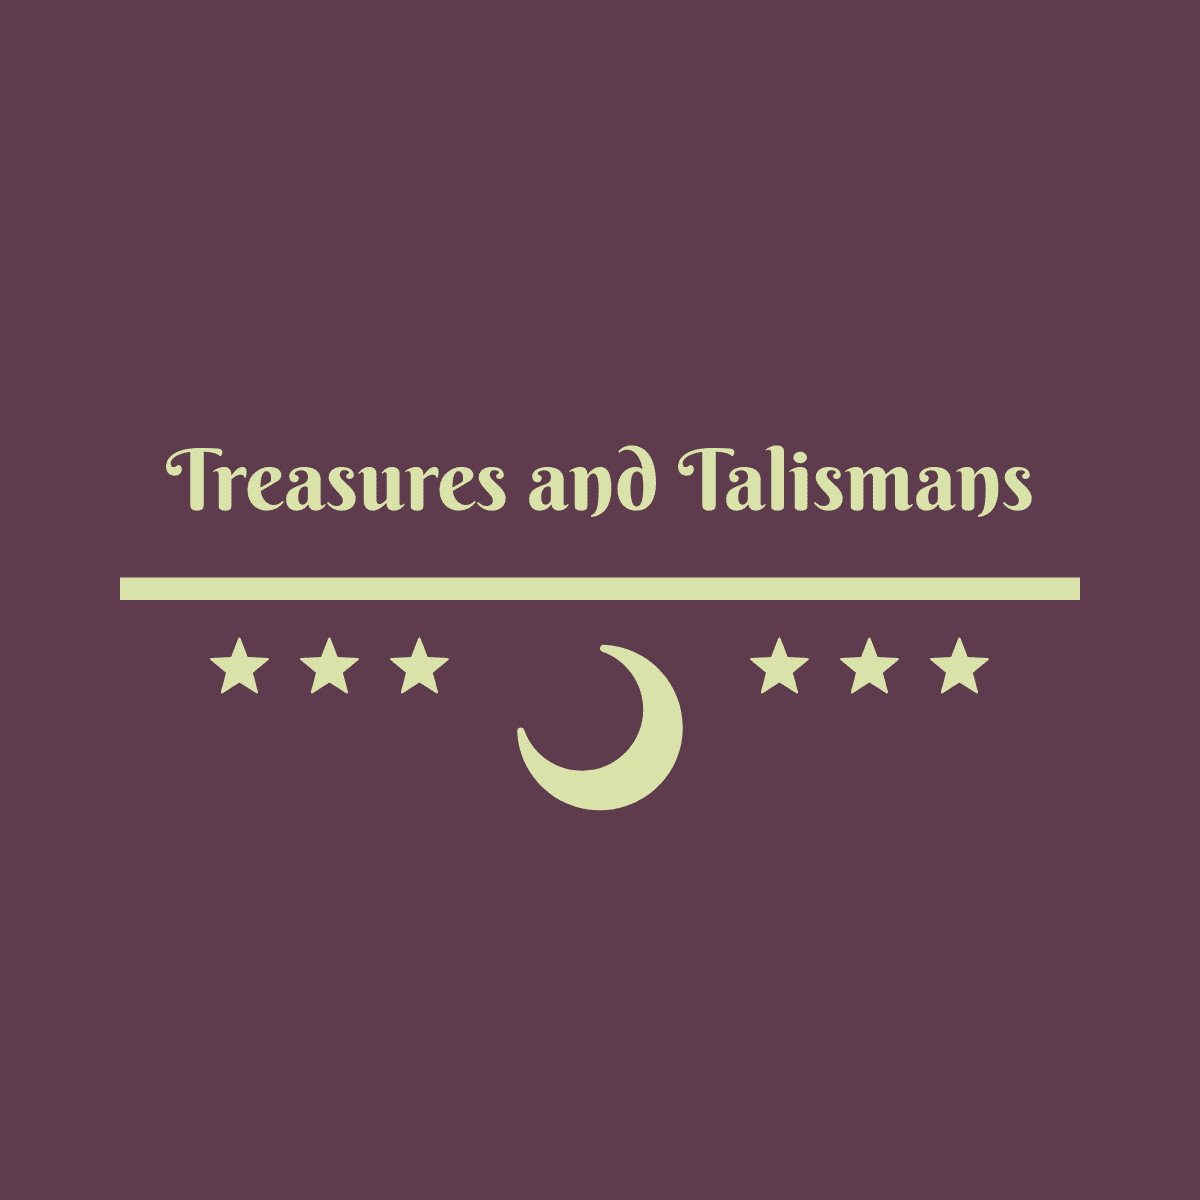 Treasures and Talismans